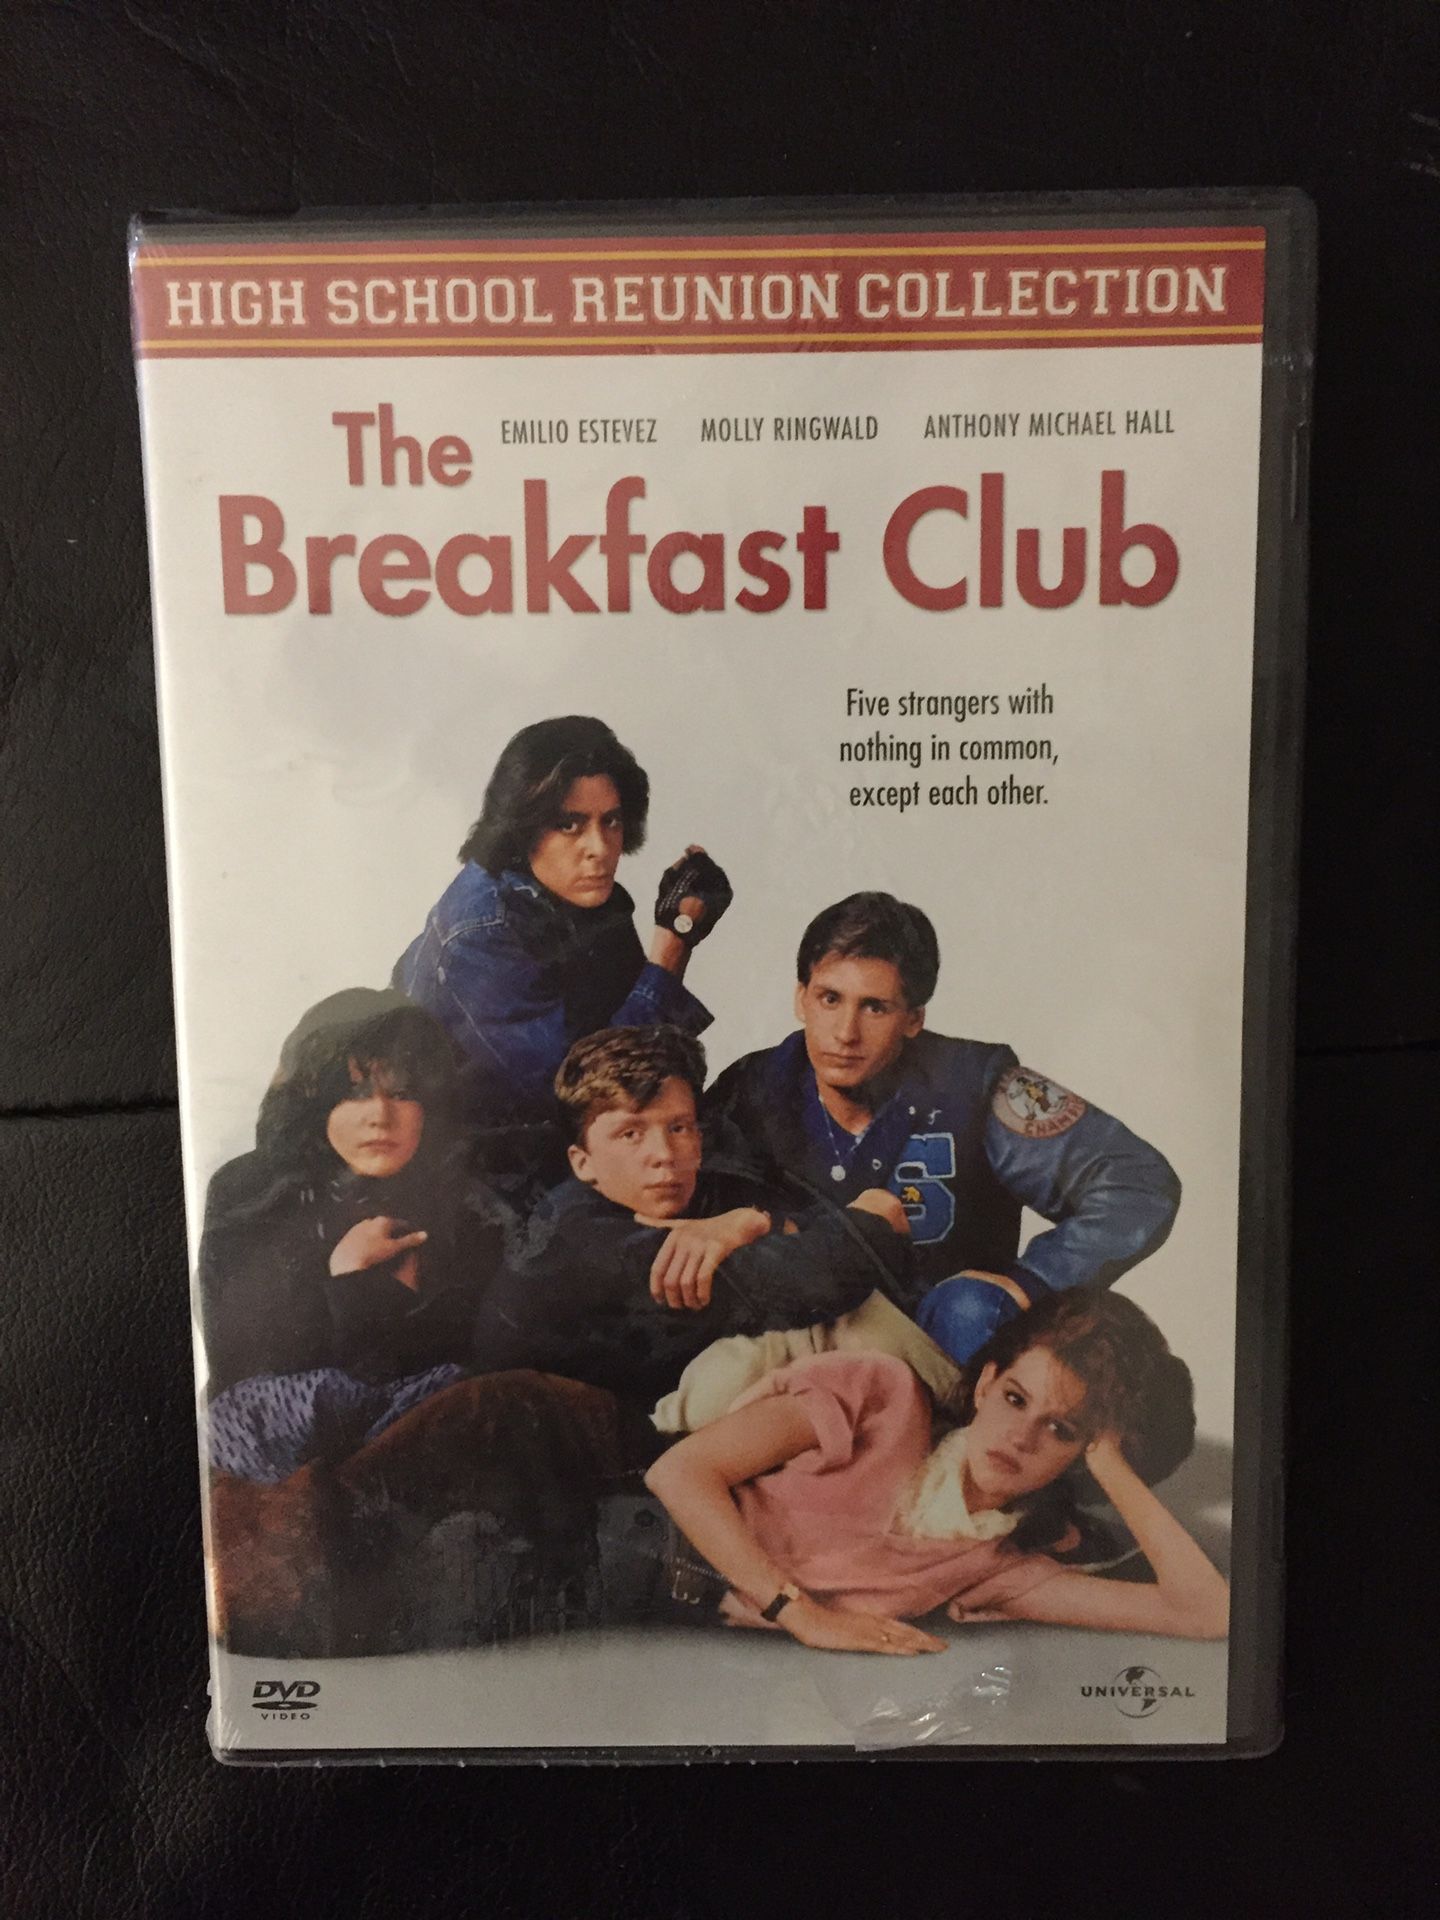 The Breakfast Club on DVD